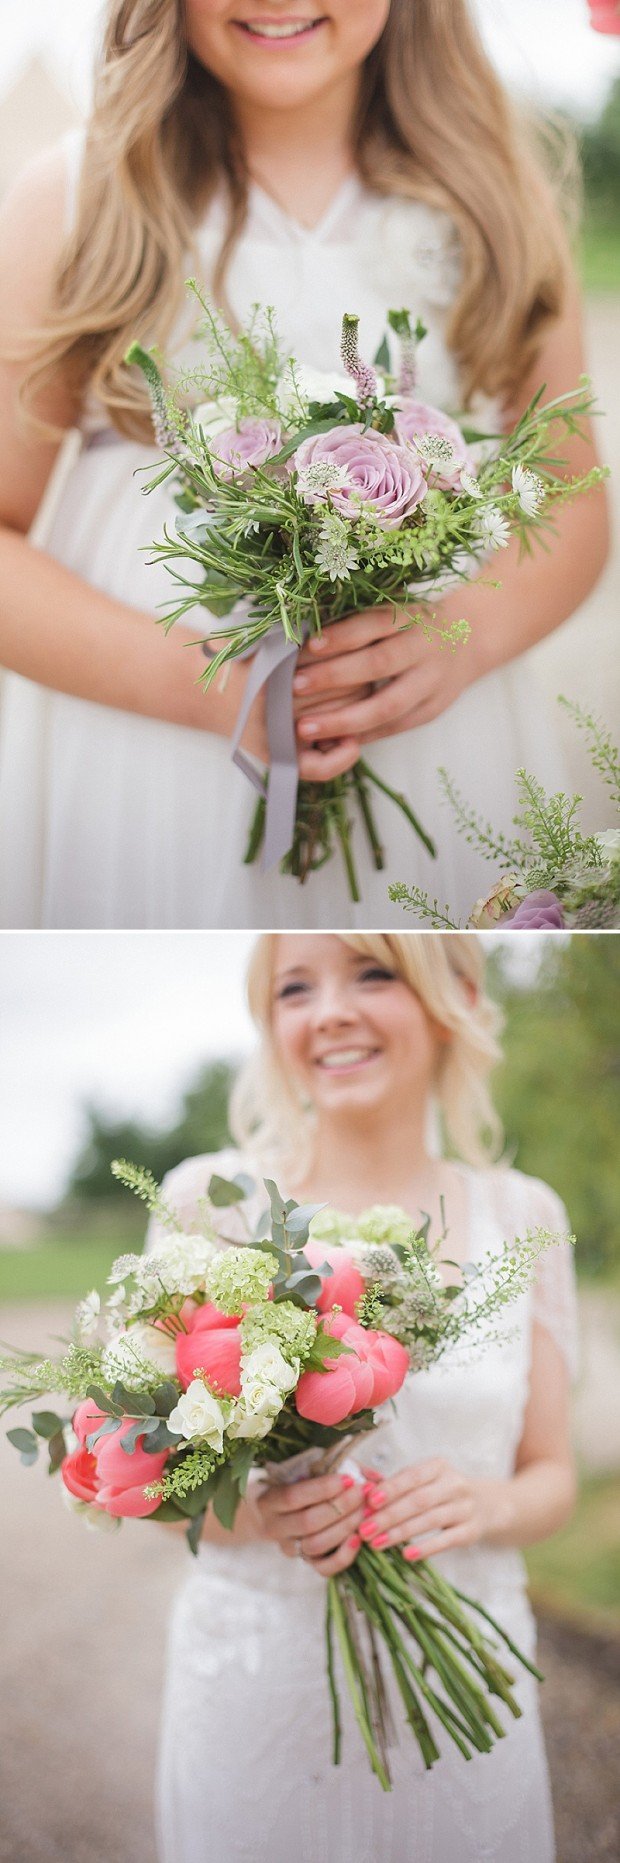 24 Amazing Wedding Bouquets (12)